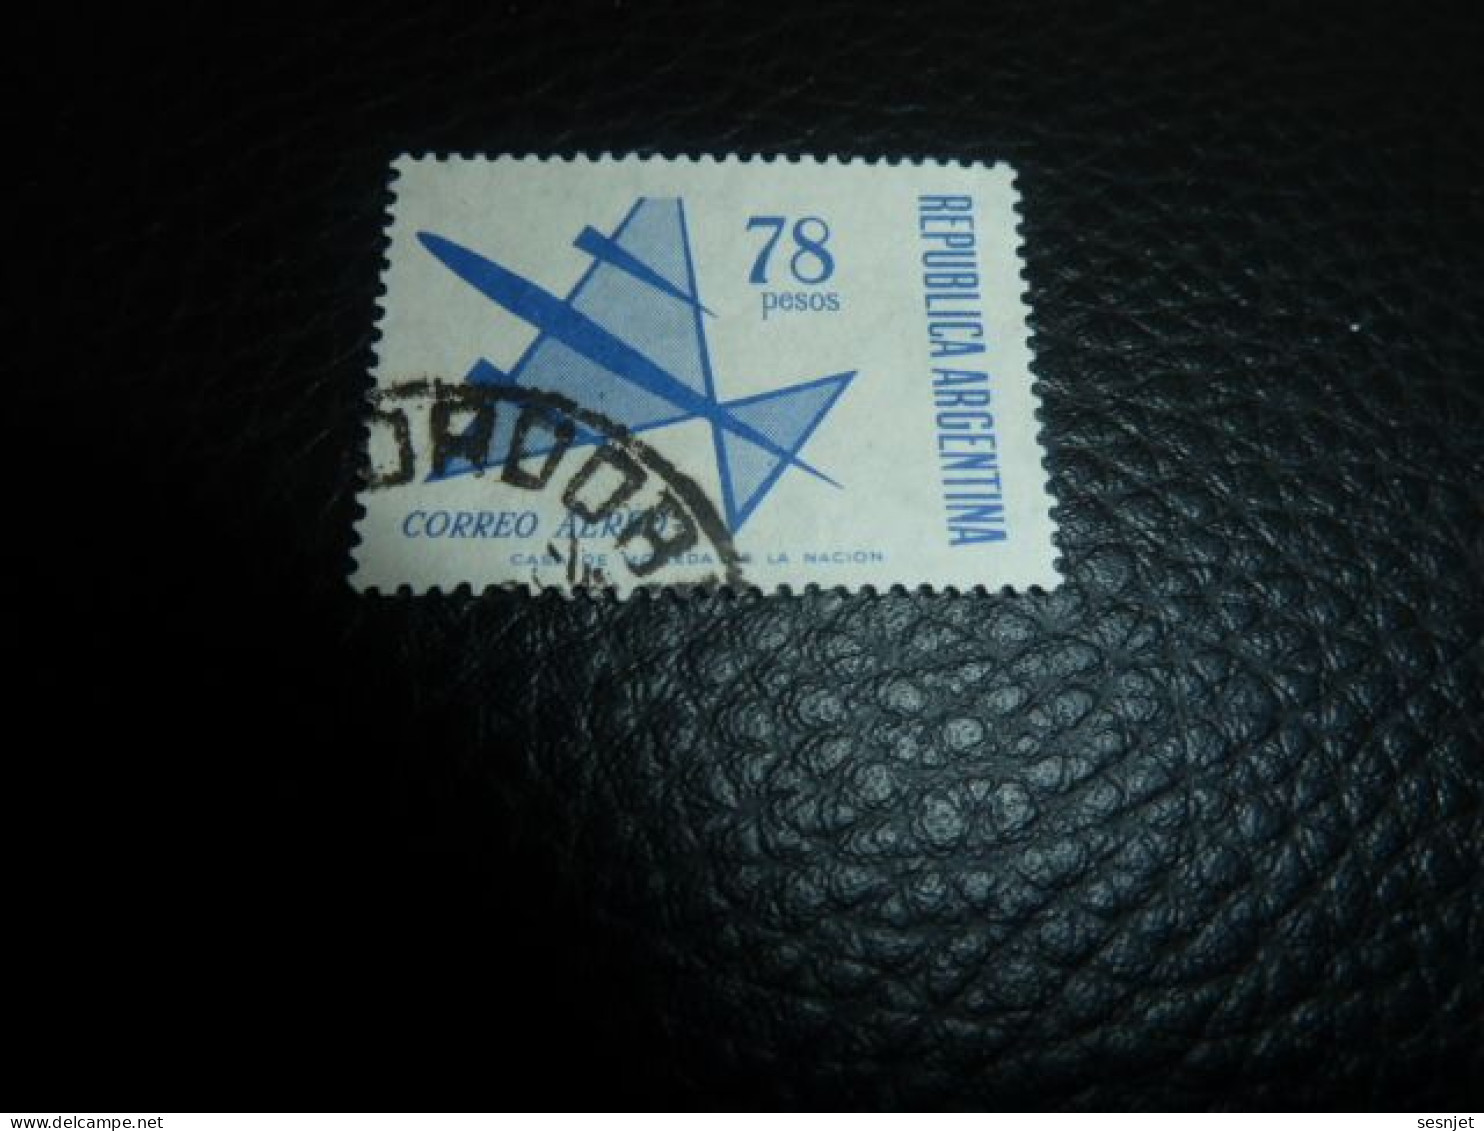 Republica Argentina - Correo Aereo - 78 Pesos - Yt 121 - Outremer - Oblitéré - Année 1968 - - Oblitérés